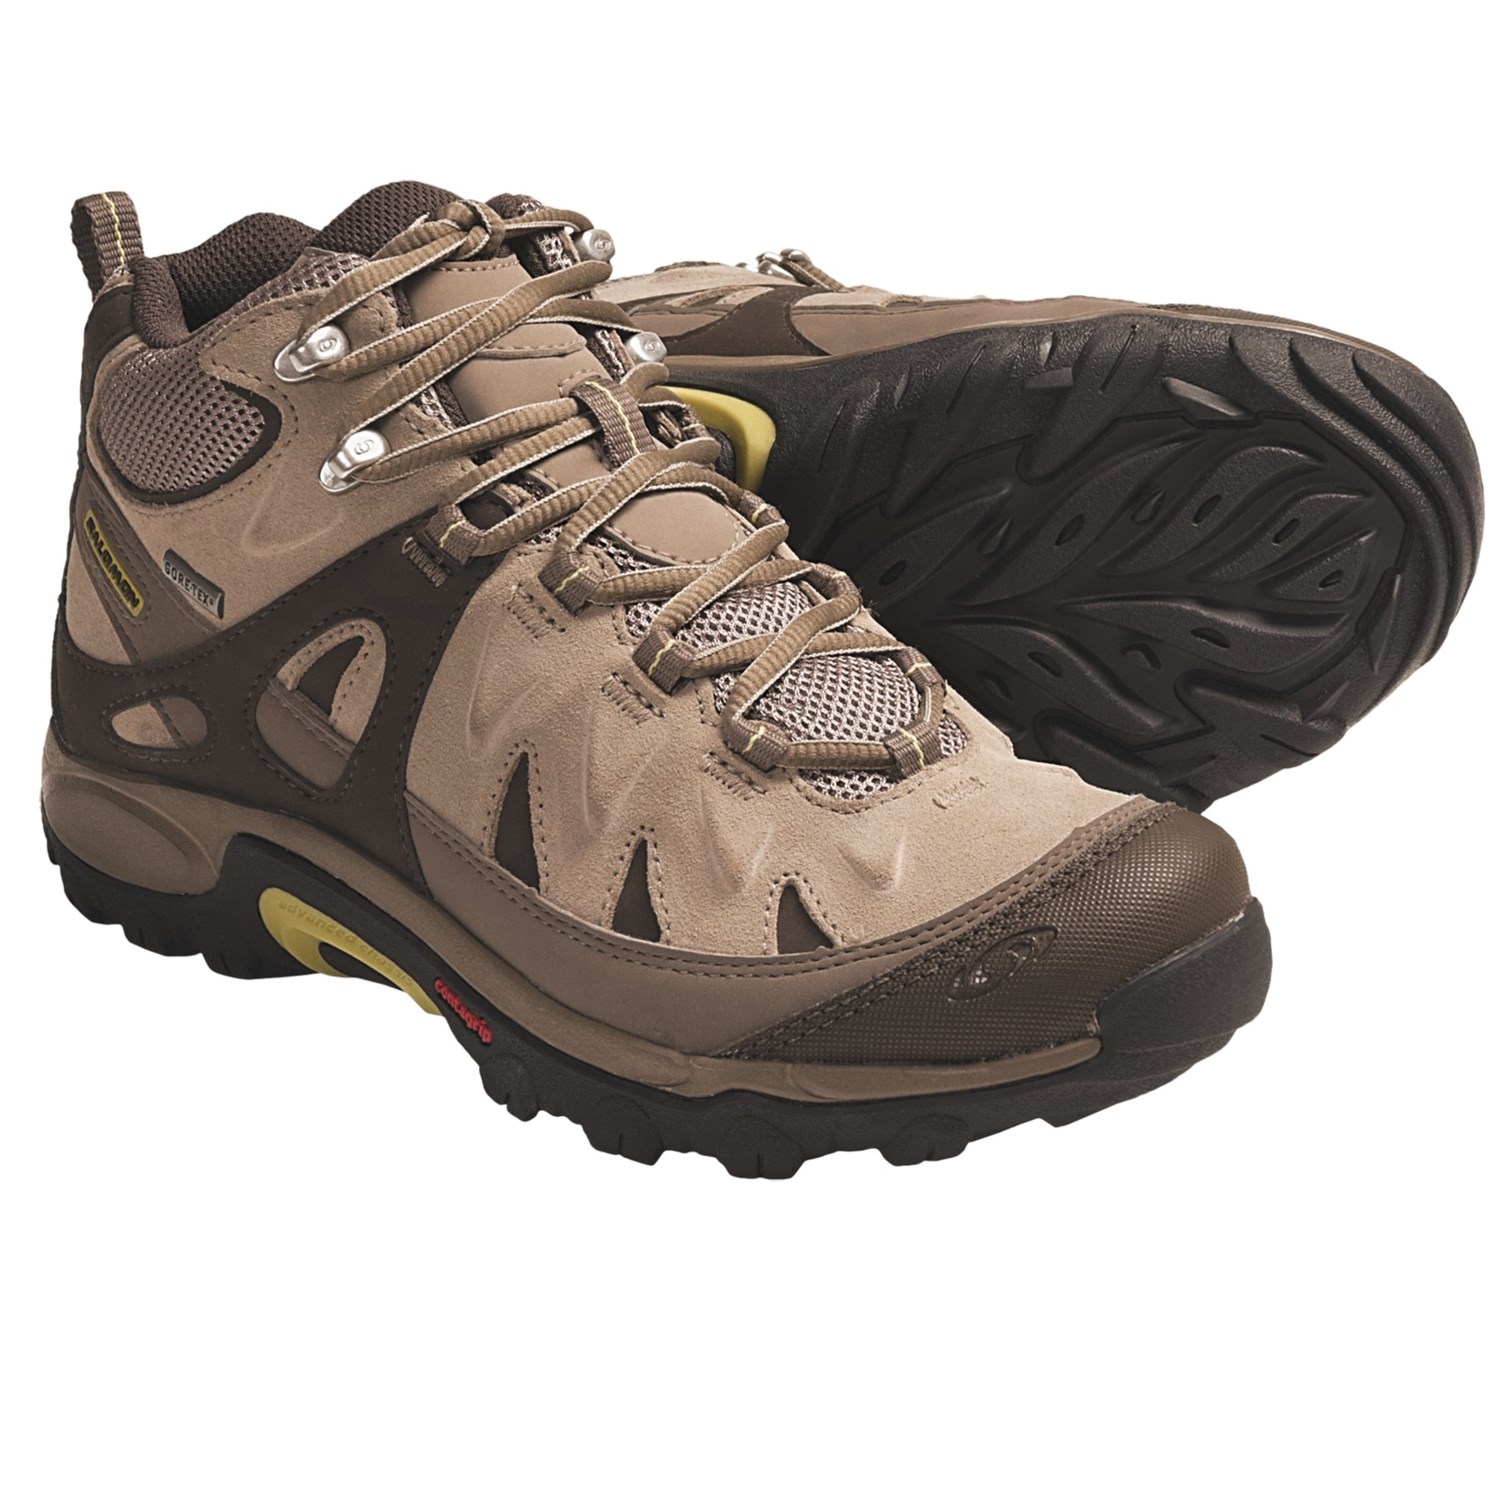 Salomon Exit Peak Mid 2 Gore-Tex® Hiking Boots (For Women) 5168D - Save 25%